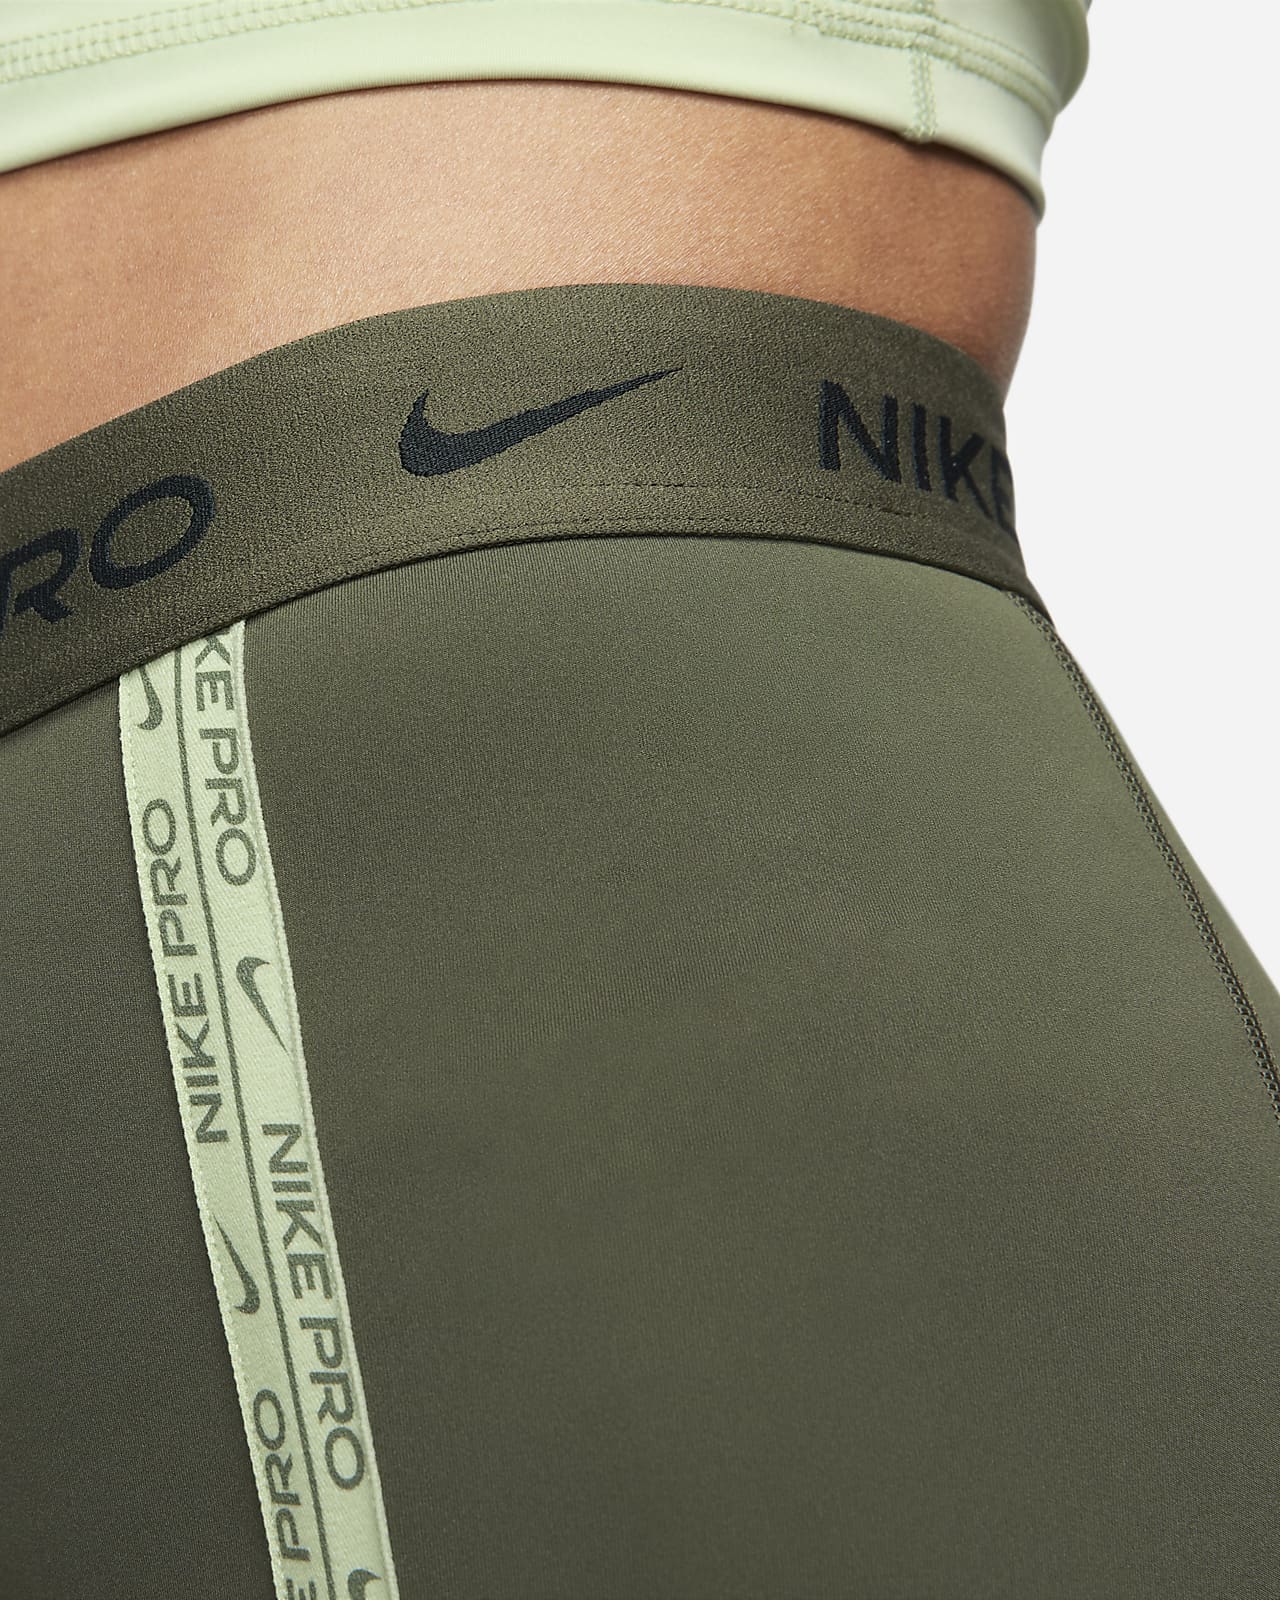 Nike Pro Dri-FIT Women's High-Waisted 3 Shorts